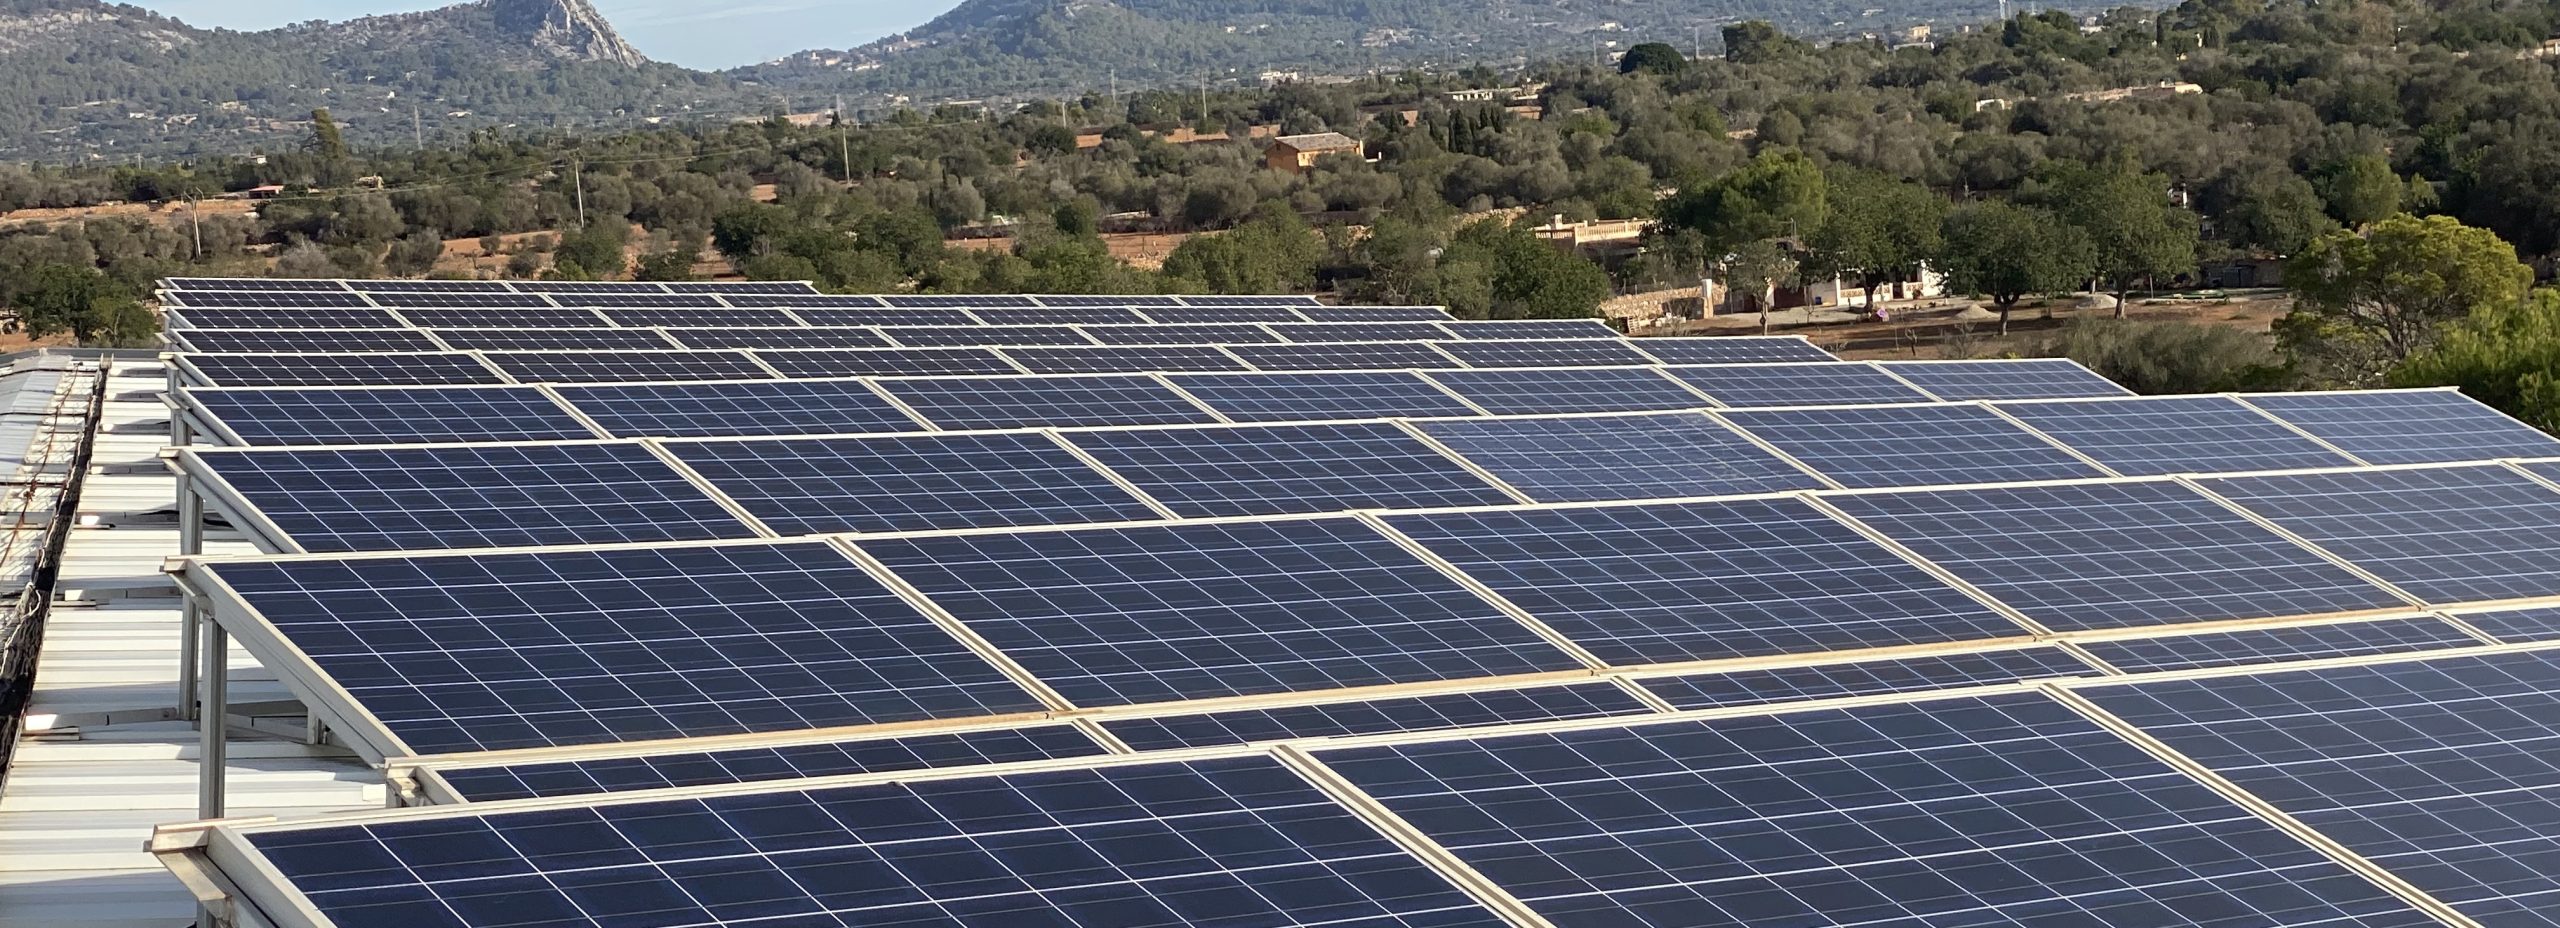  solar panels generating